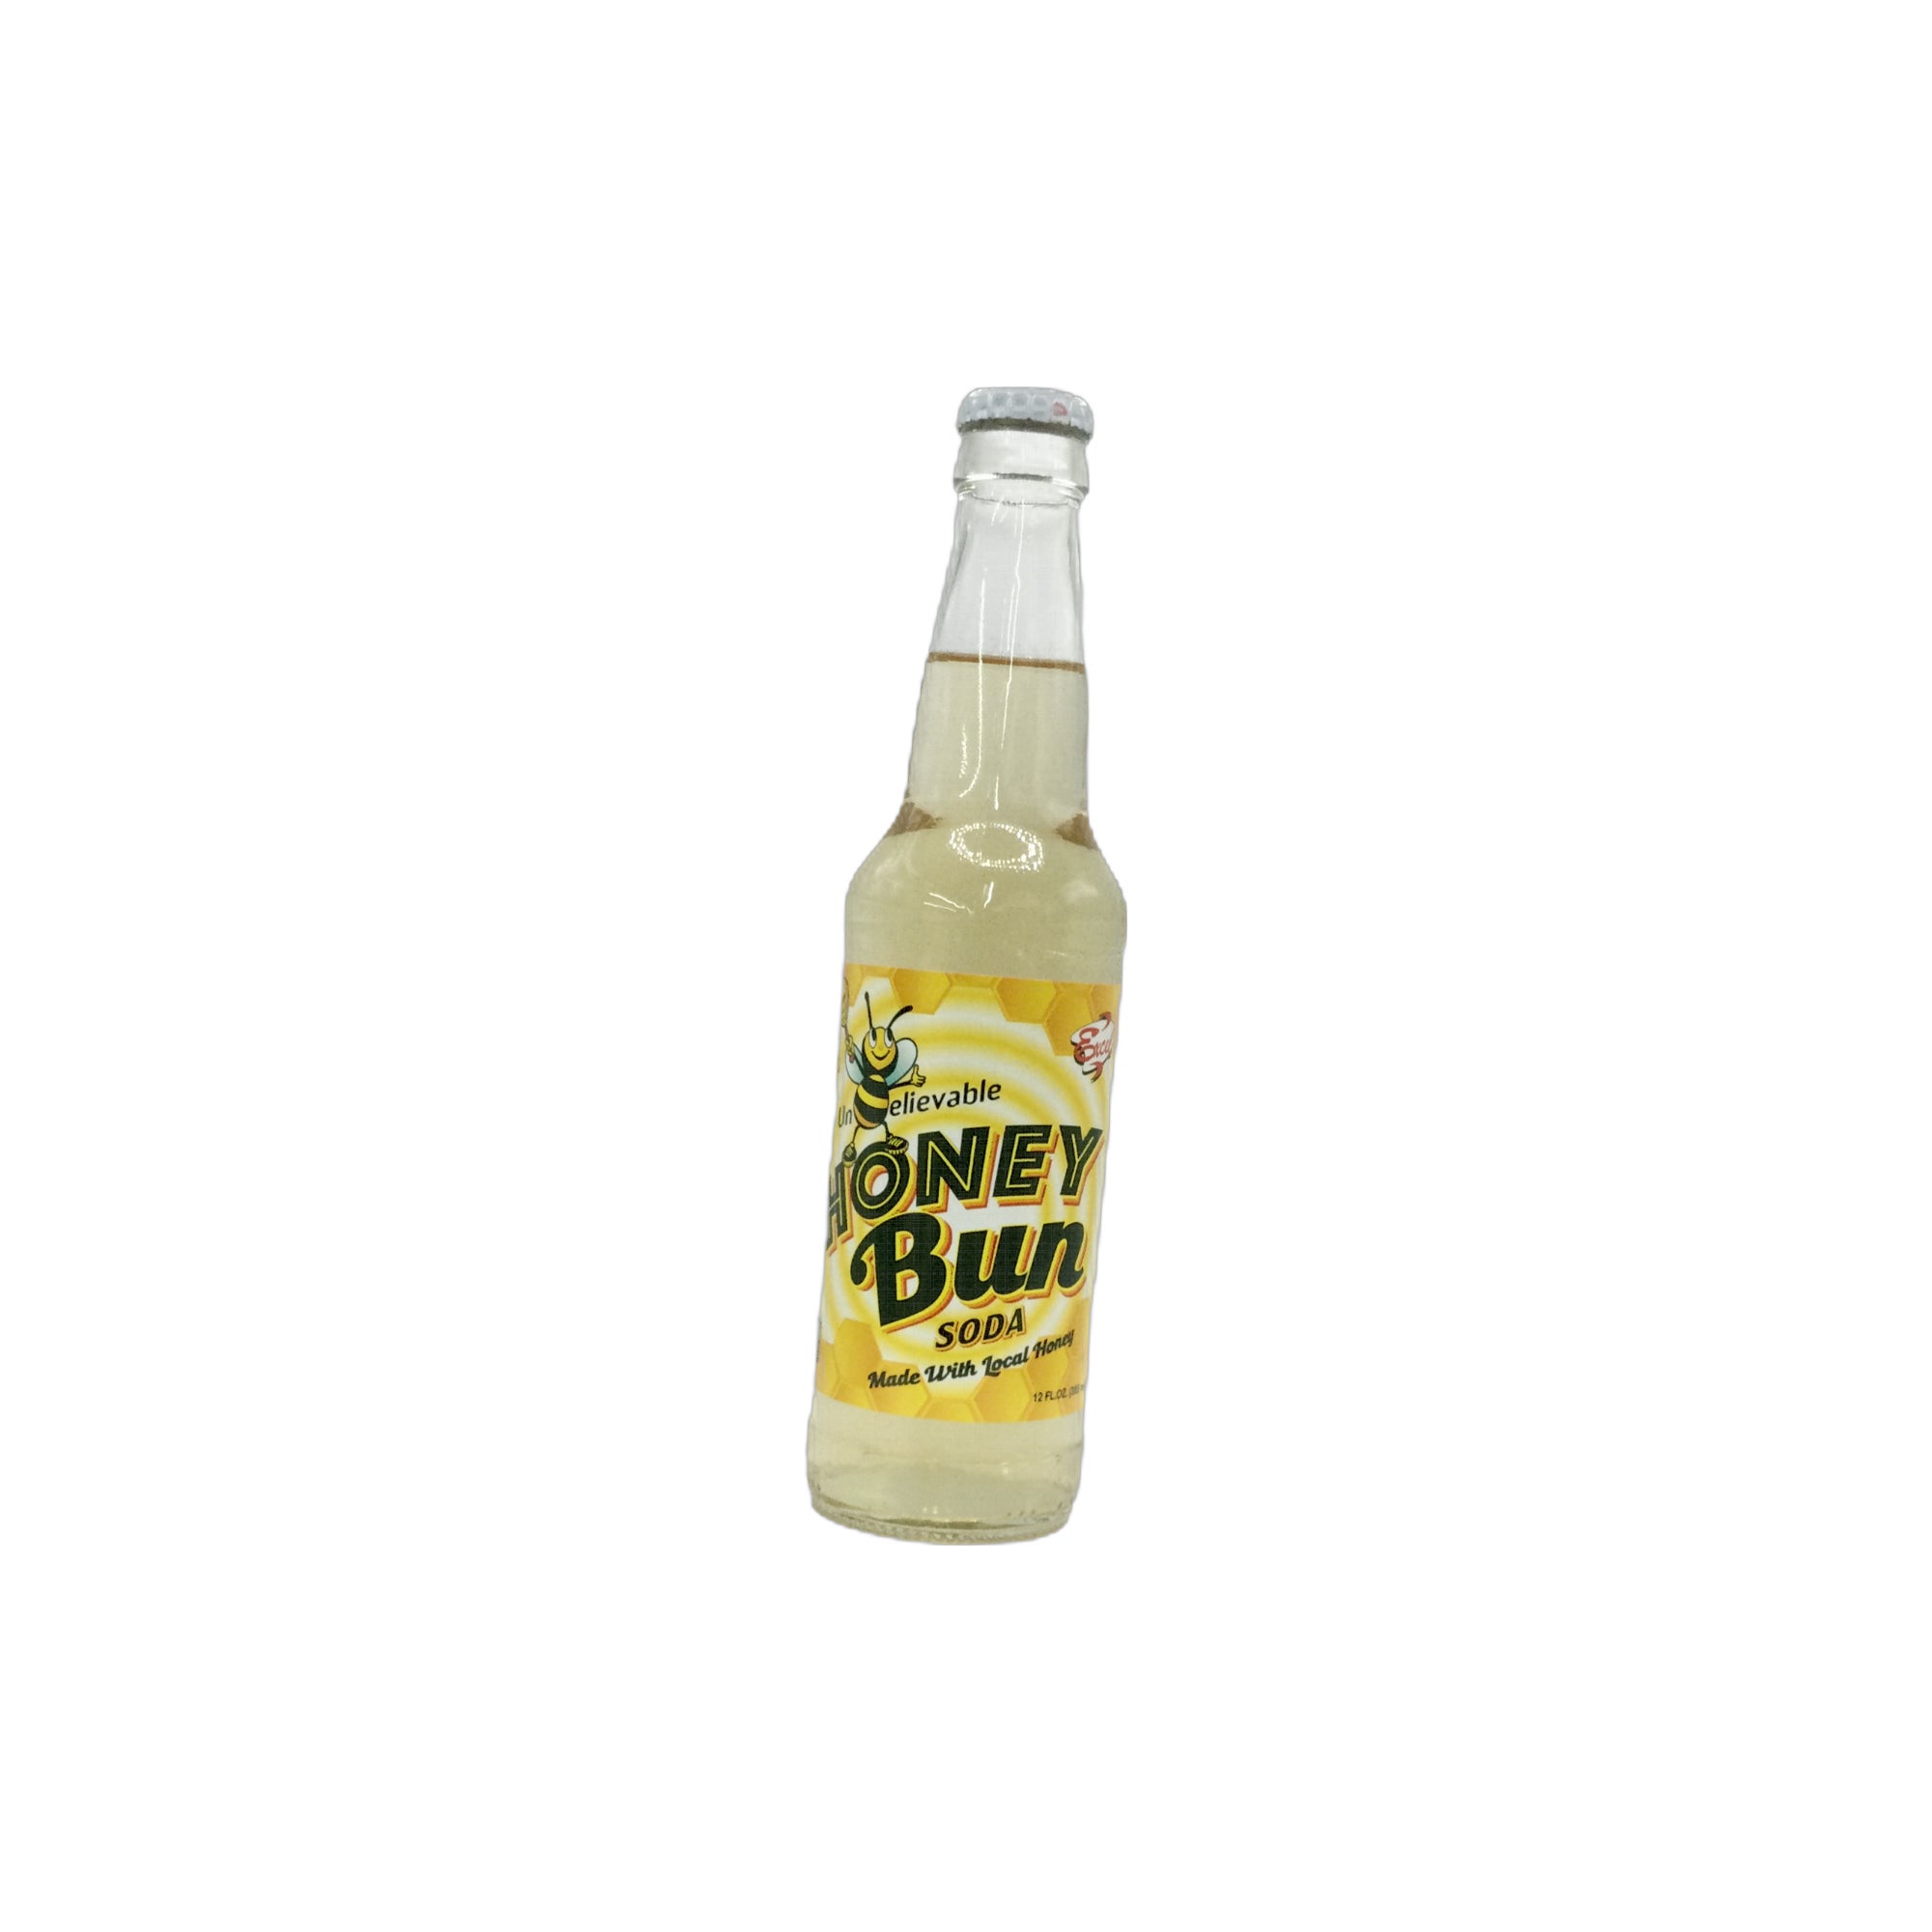 Unbelievable Honey Bun Soda 12 oz Glass Bottle from Excel